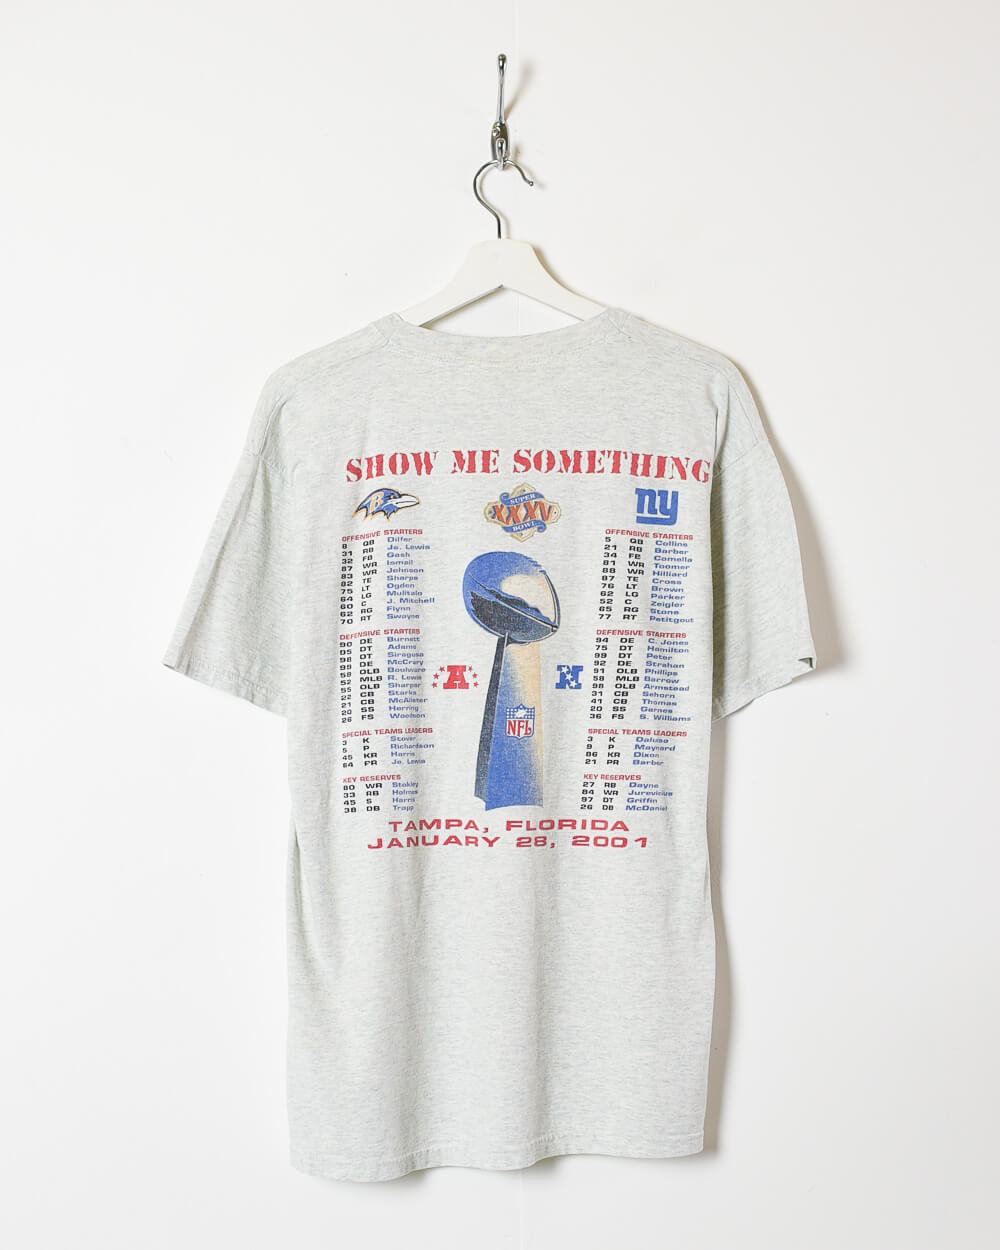 Stone NFL Super Bowl Tampa Florida 2001 T-Shirt - X-Large